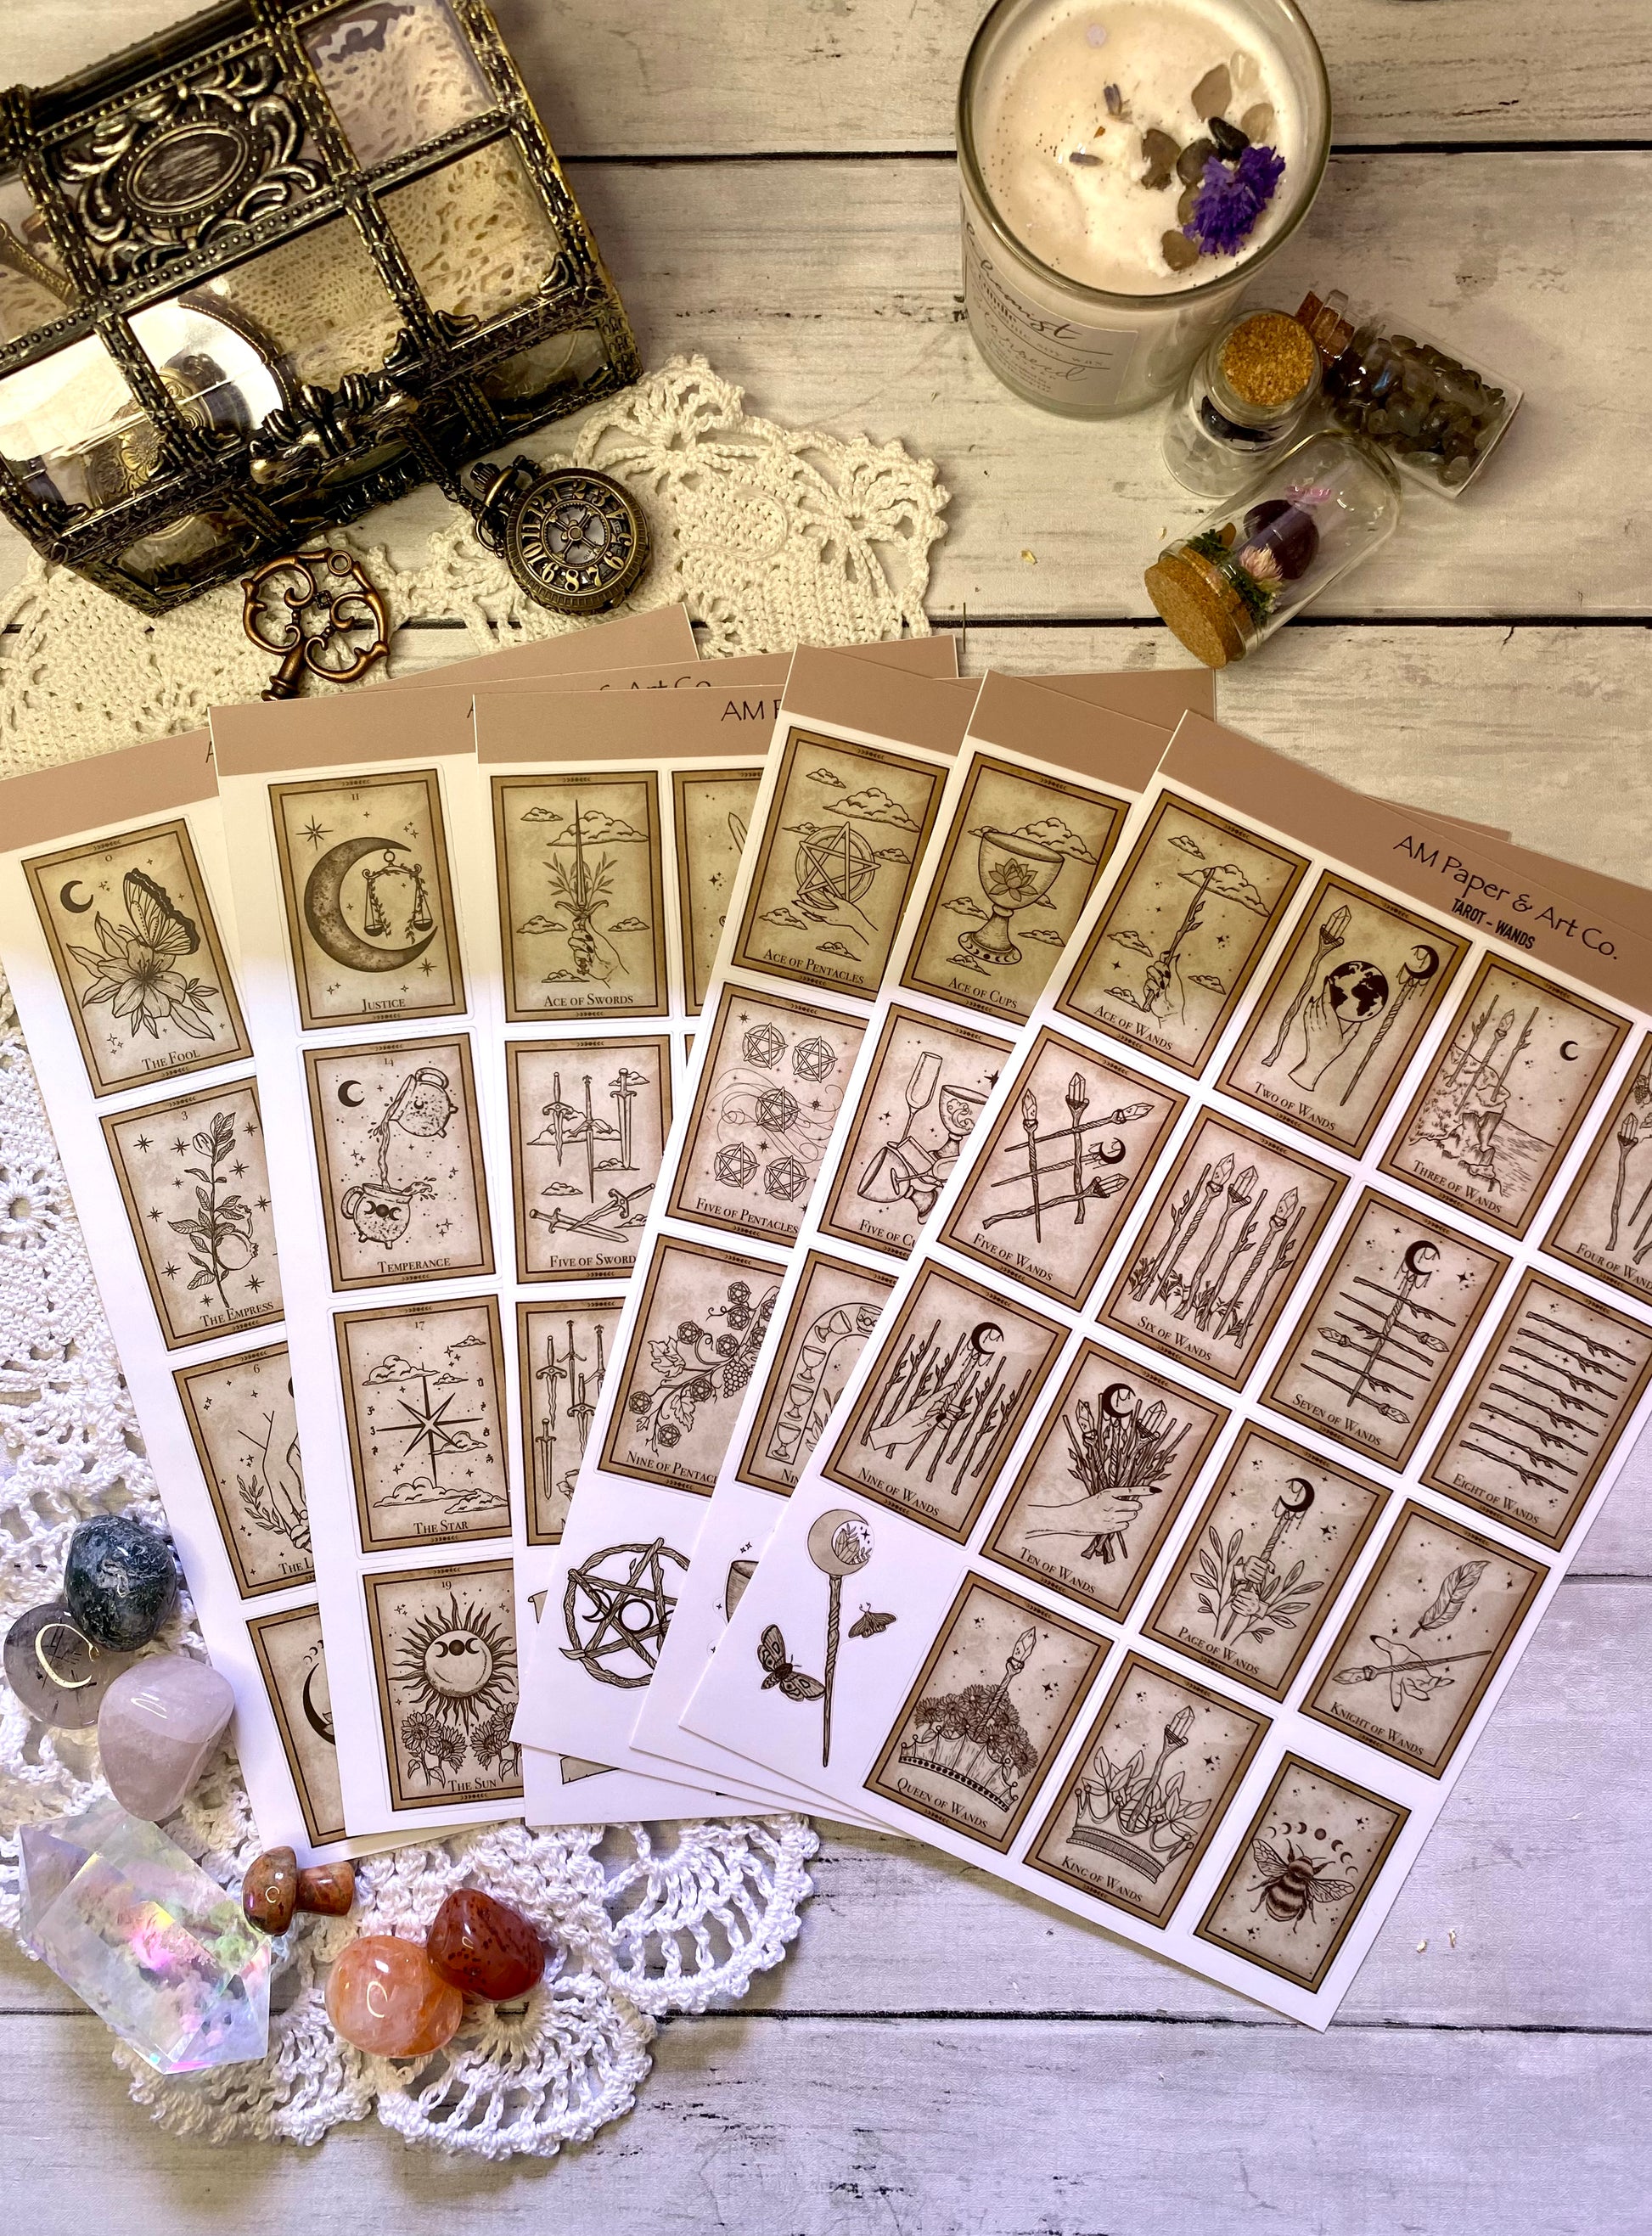 Tarot Cards (Minor Arcana) Stickers – AM Paper & Art Co.